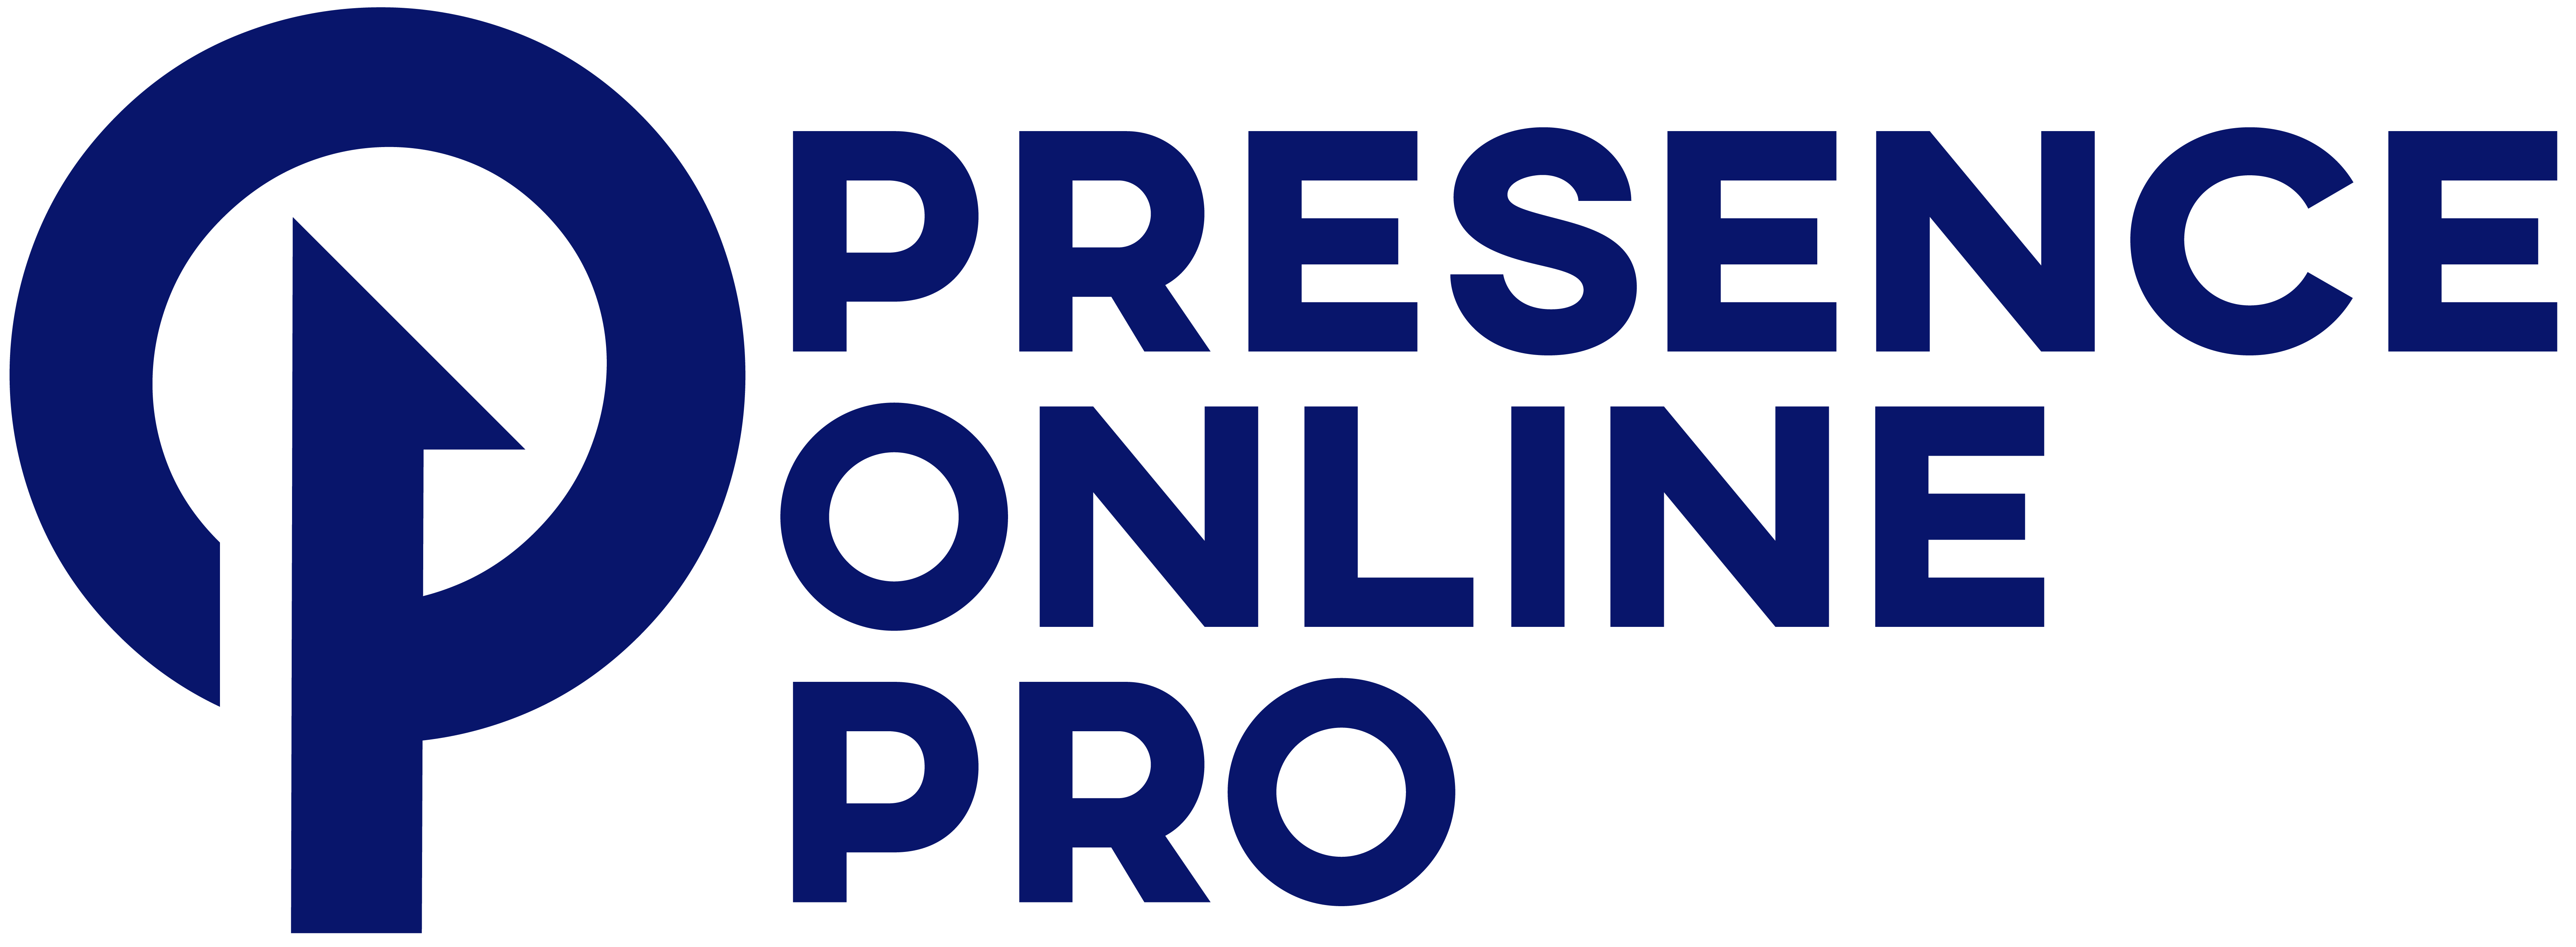 presence online pro-01